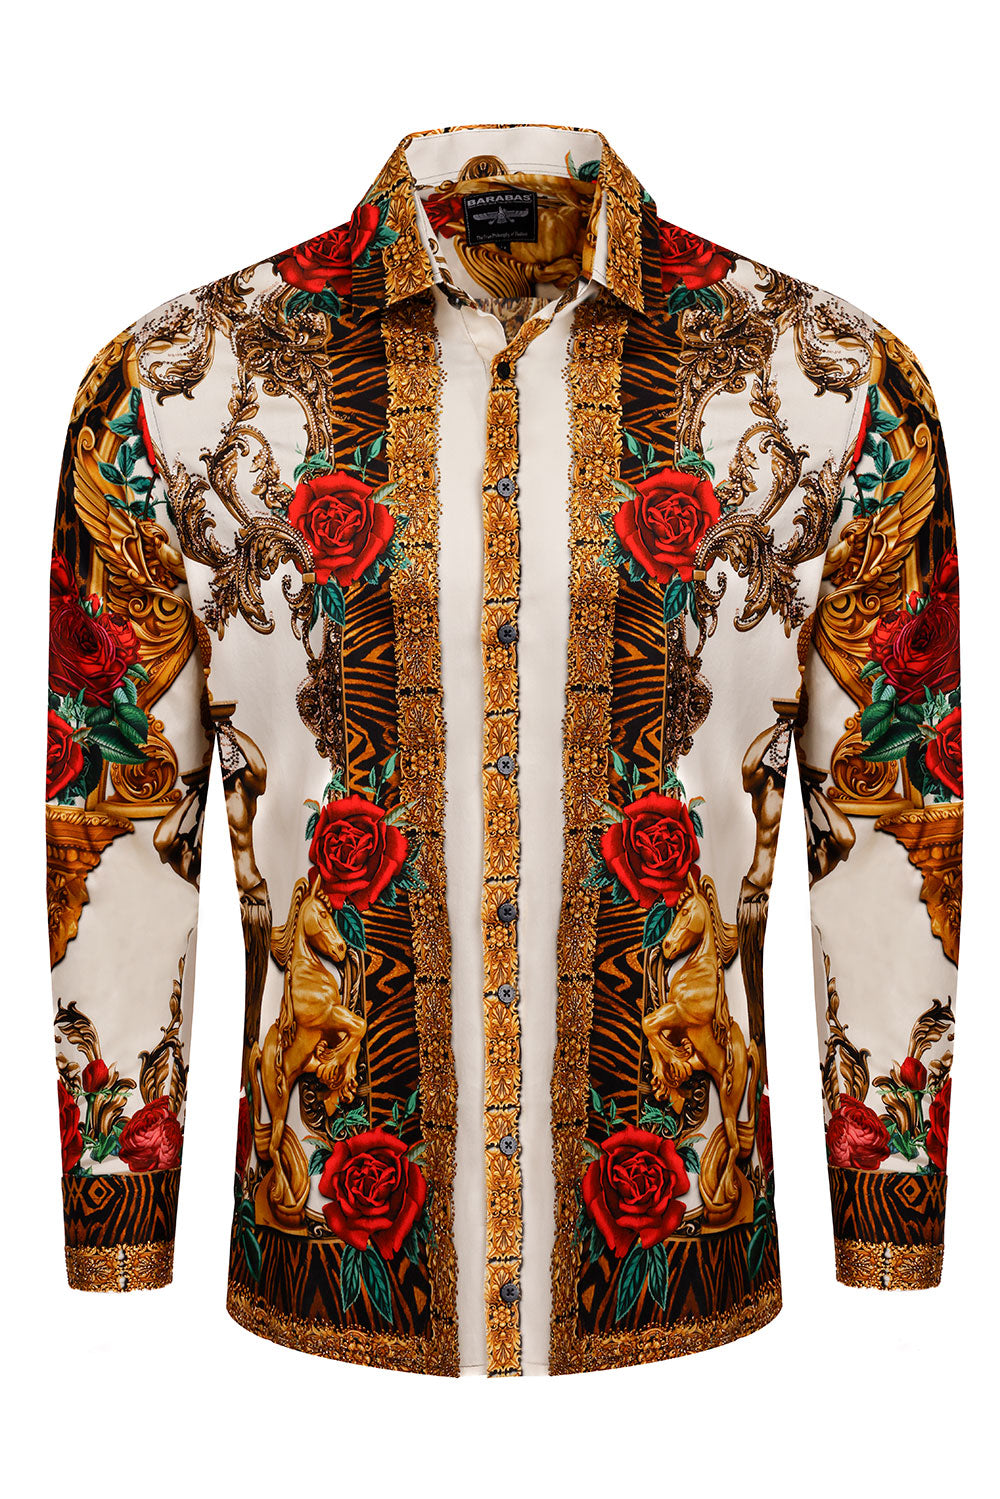 BARABAS Men's Rhinestone Floral Unicorn Long Sleeve Shirts 3SPR418 Cream